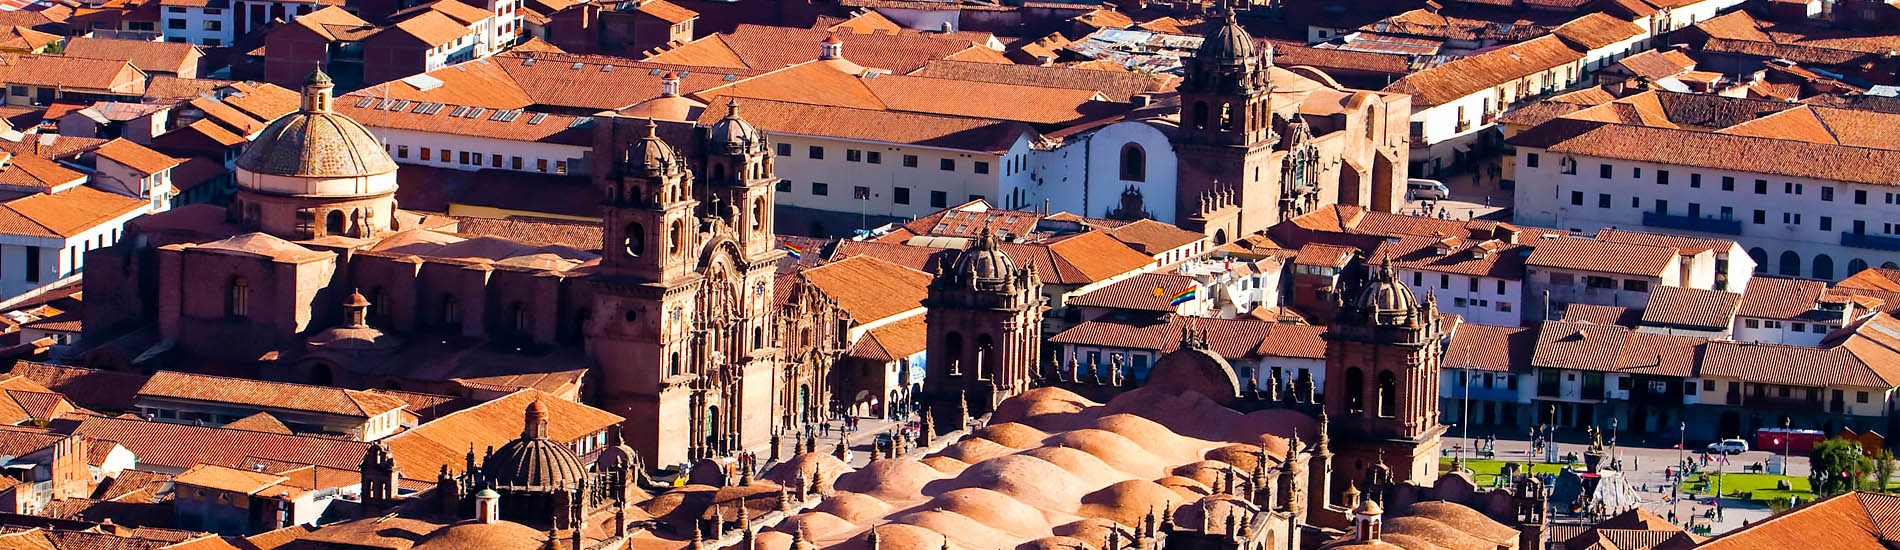 Cusco colonial main square